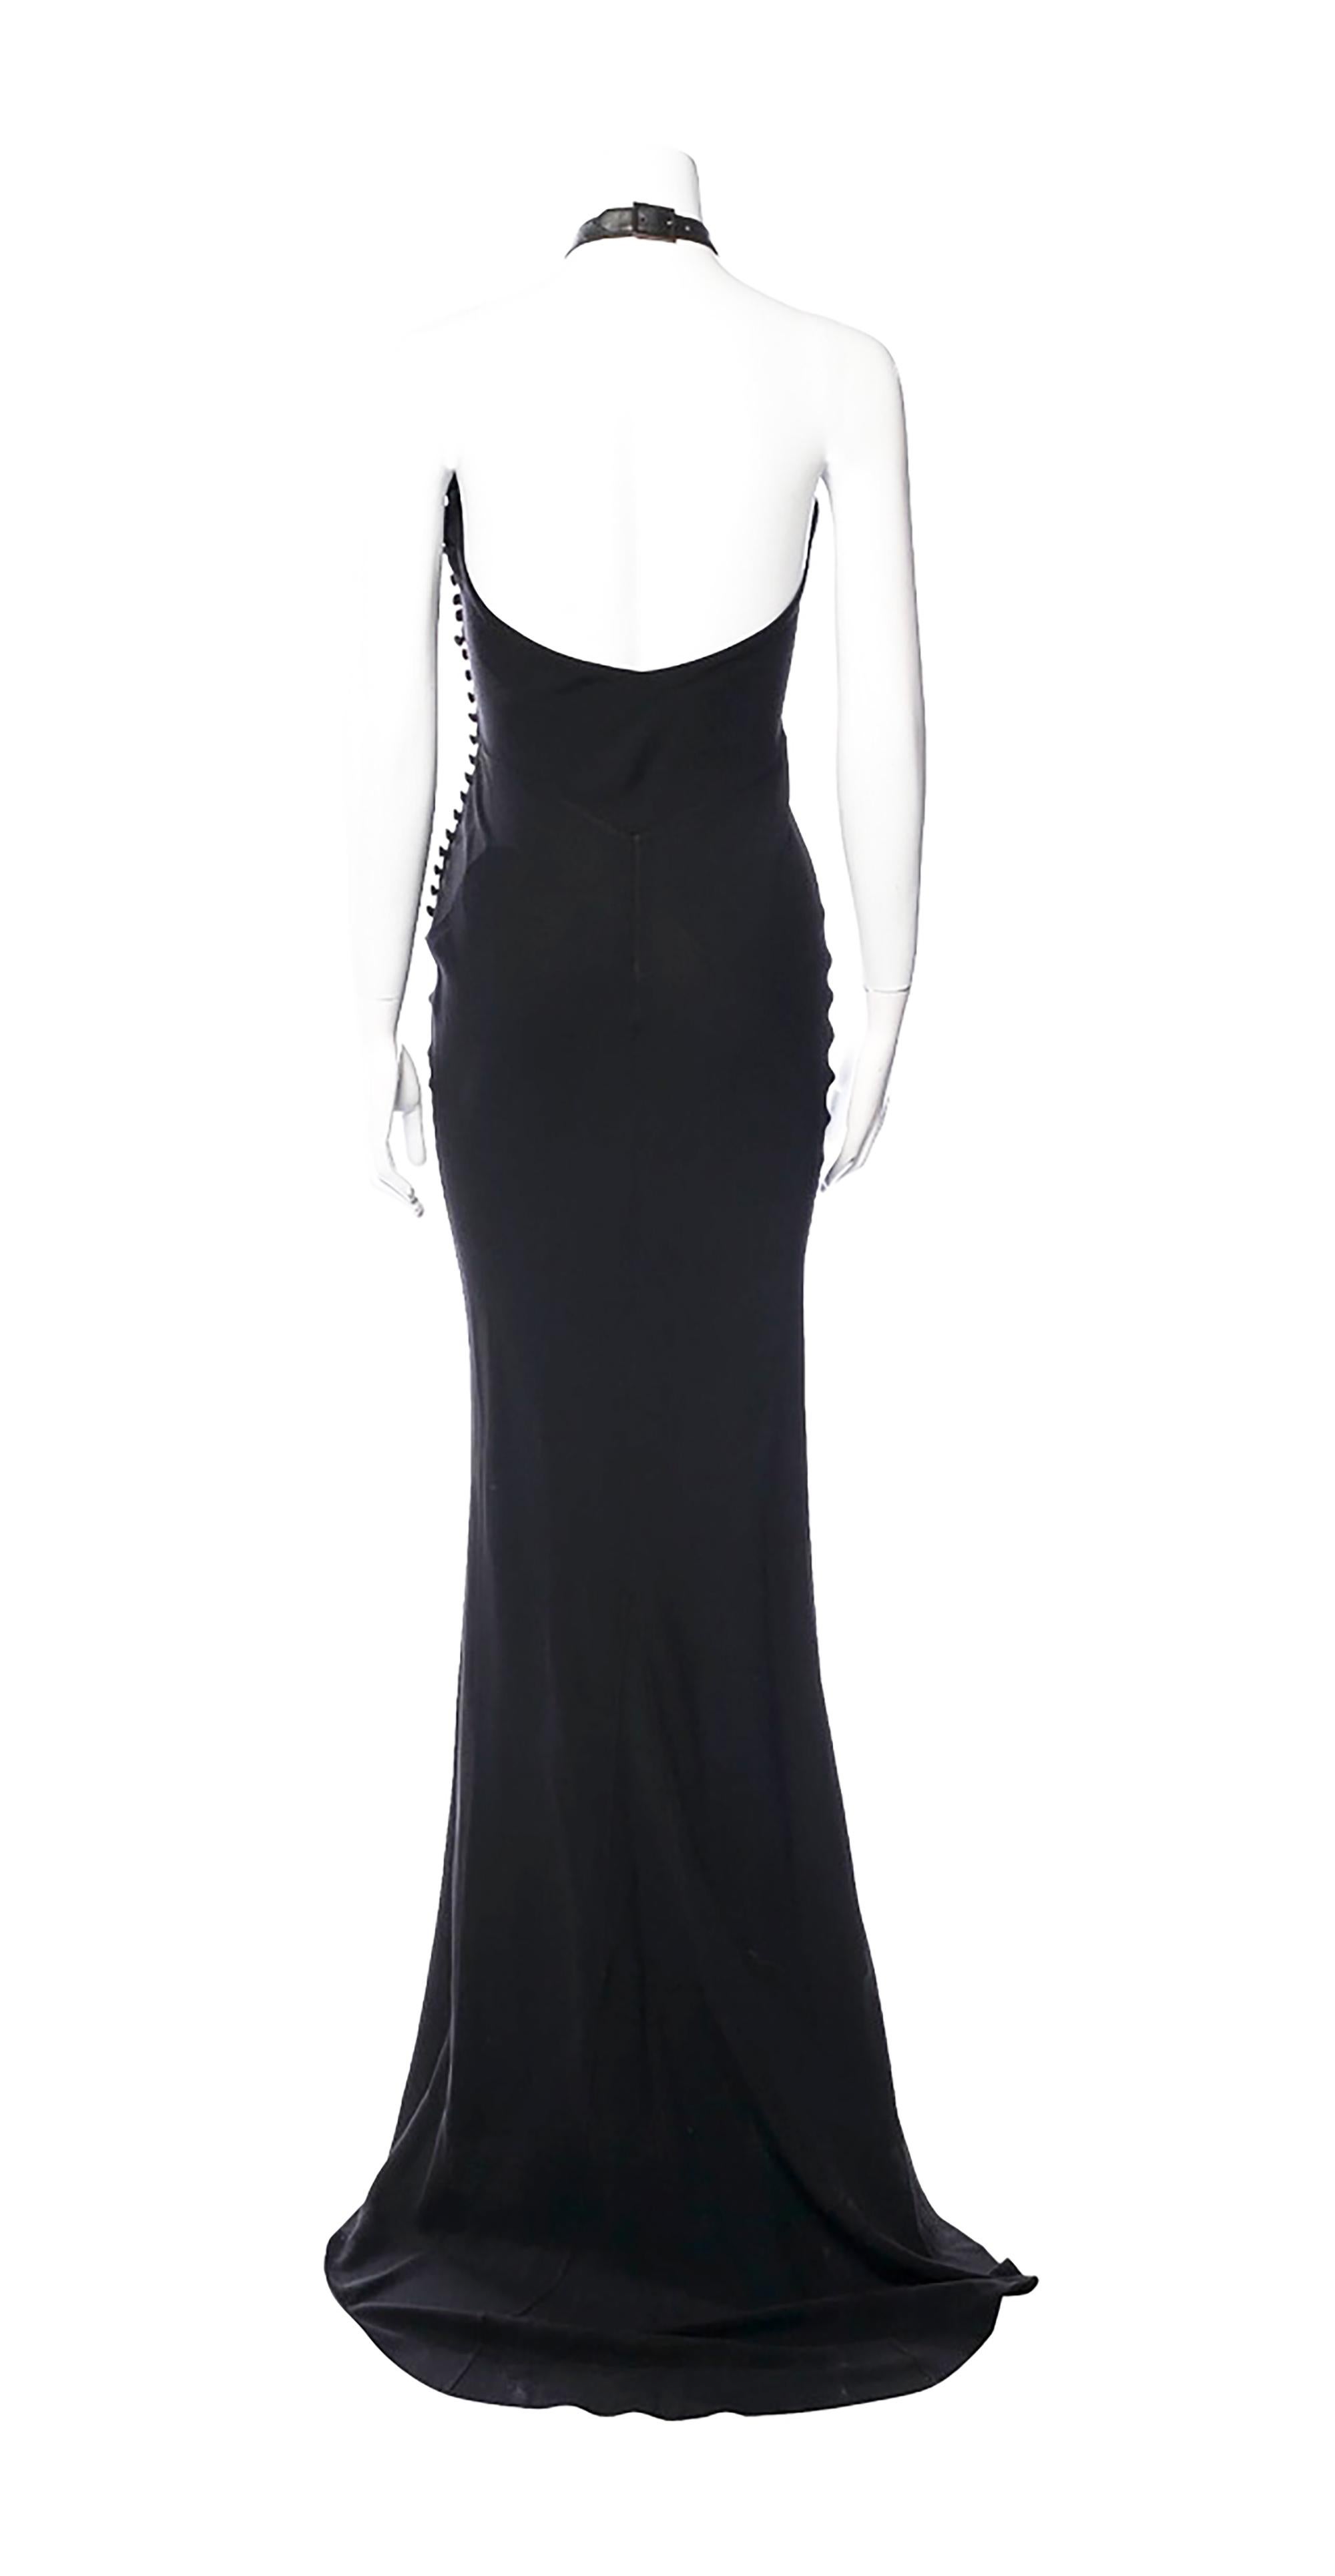 2001 S/S Christian Dior Black Evening Gown 
By John Galliano
Halterneck
Acetate, Viscose, lambskin choker
29